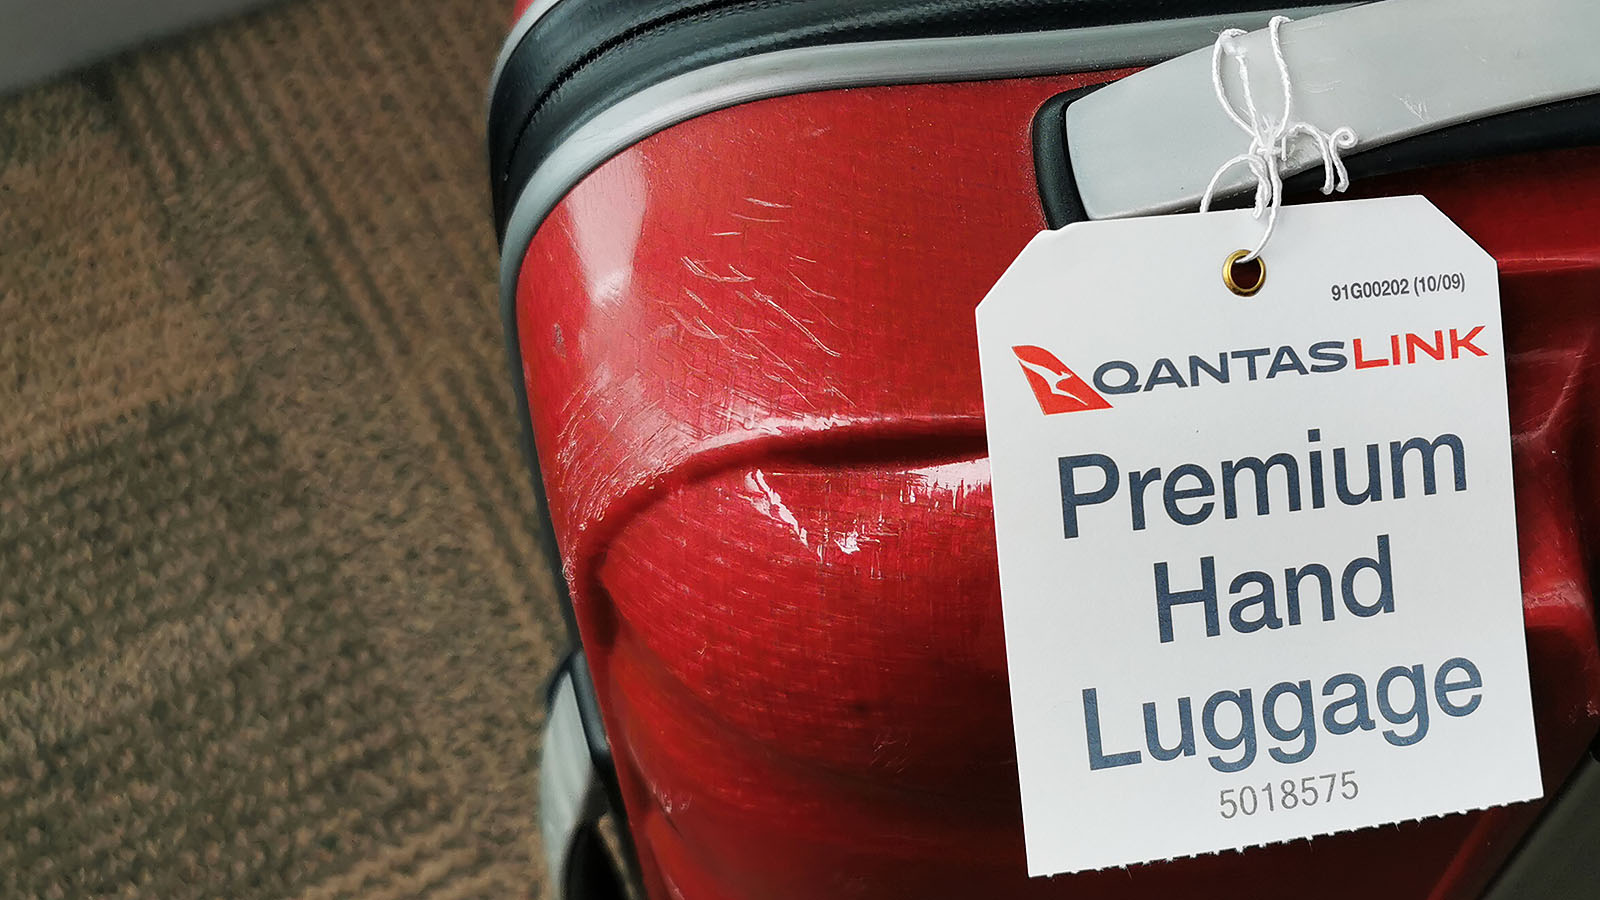 QantasLink Premium Hand Luggage